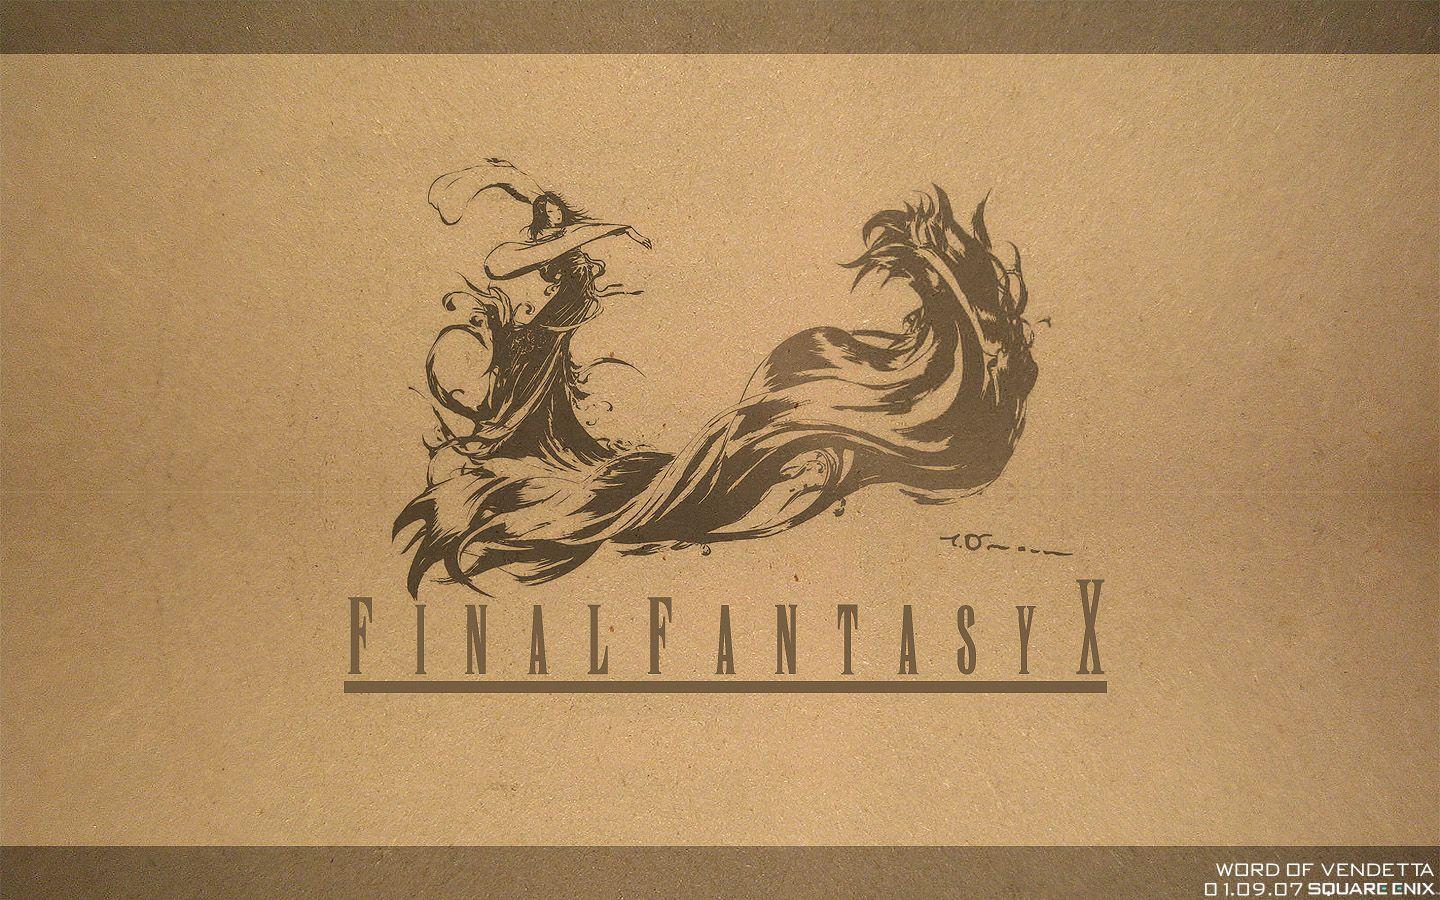 Download the Final Fantasy X Wallpaper, Final Fantasy X iPhone